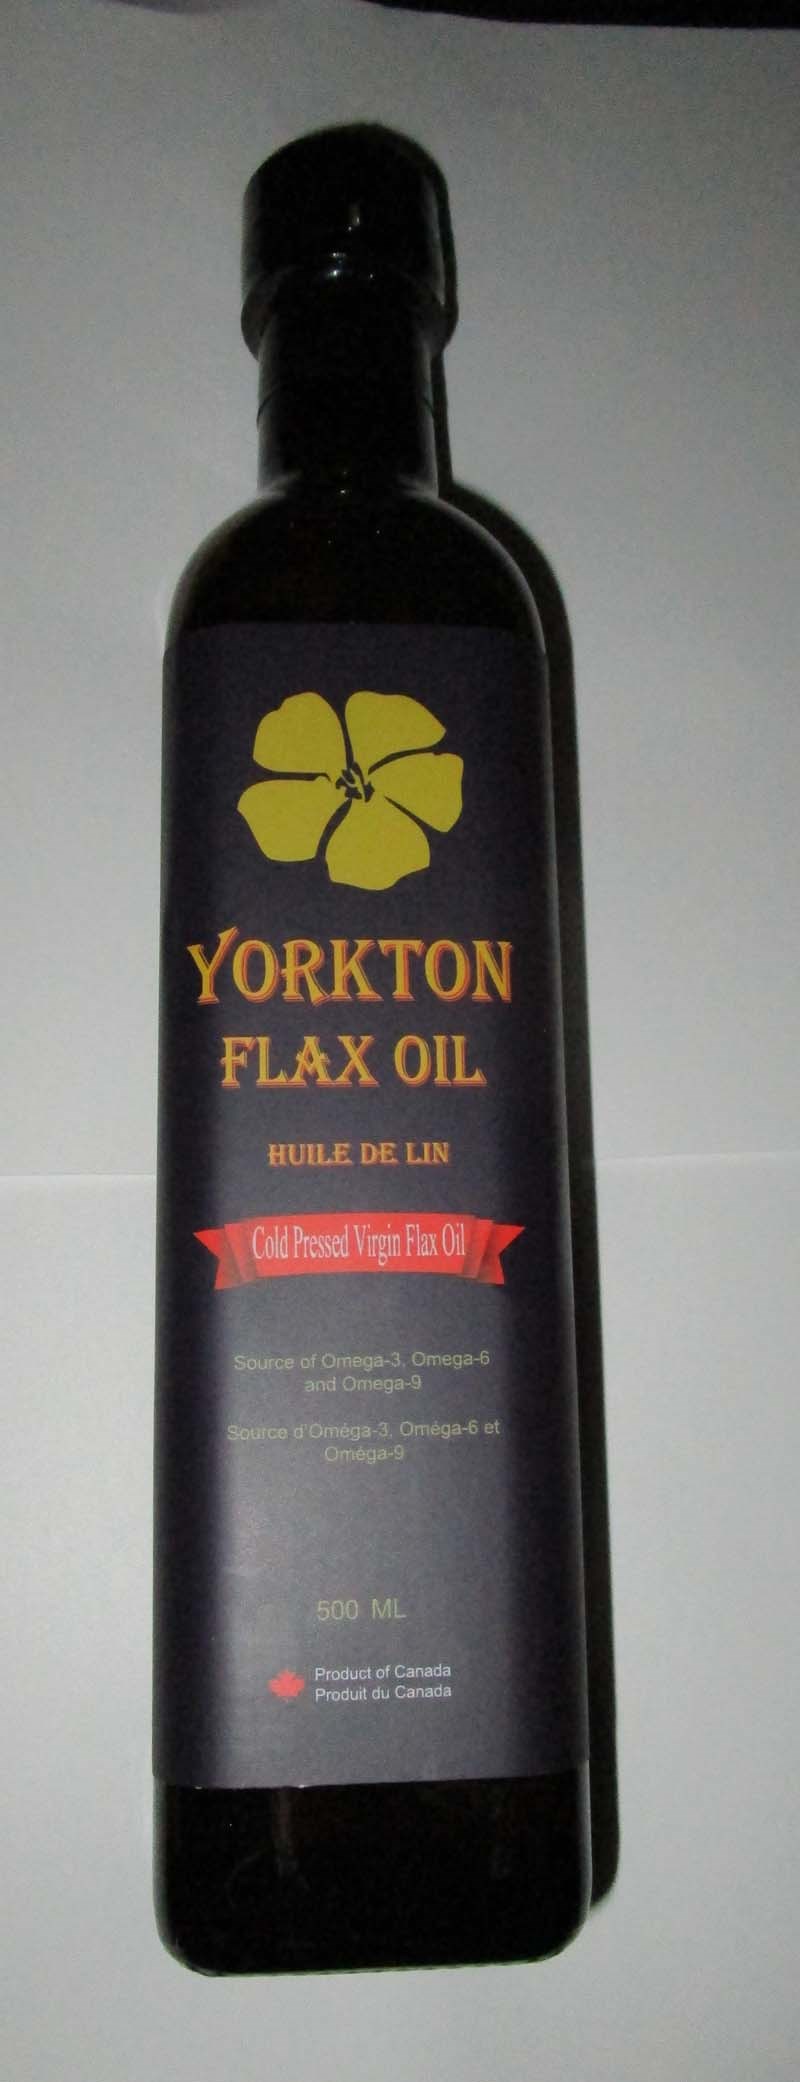 Yorkton Flax Oil